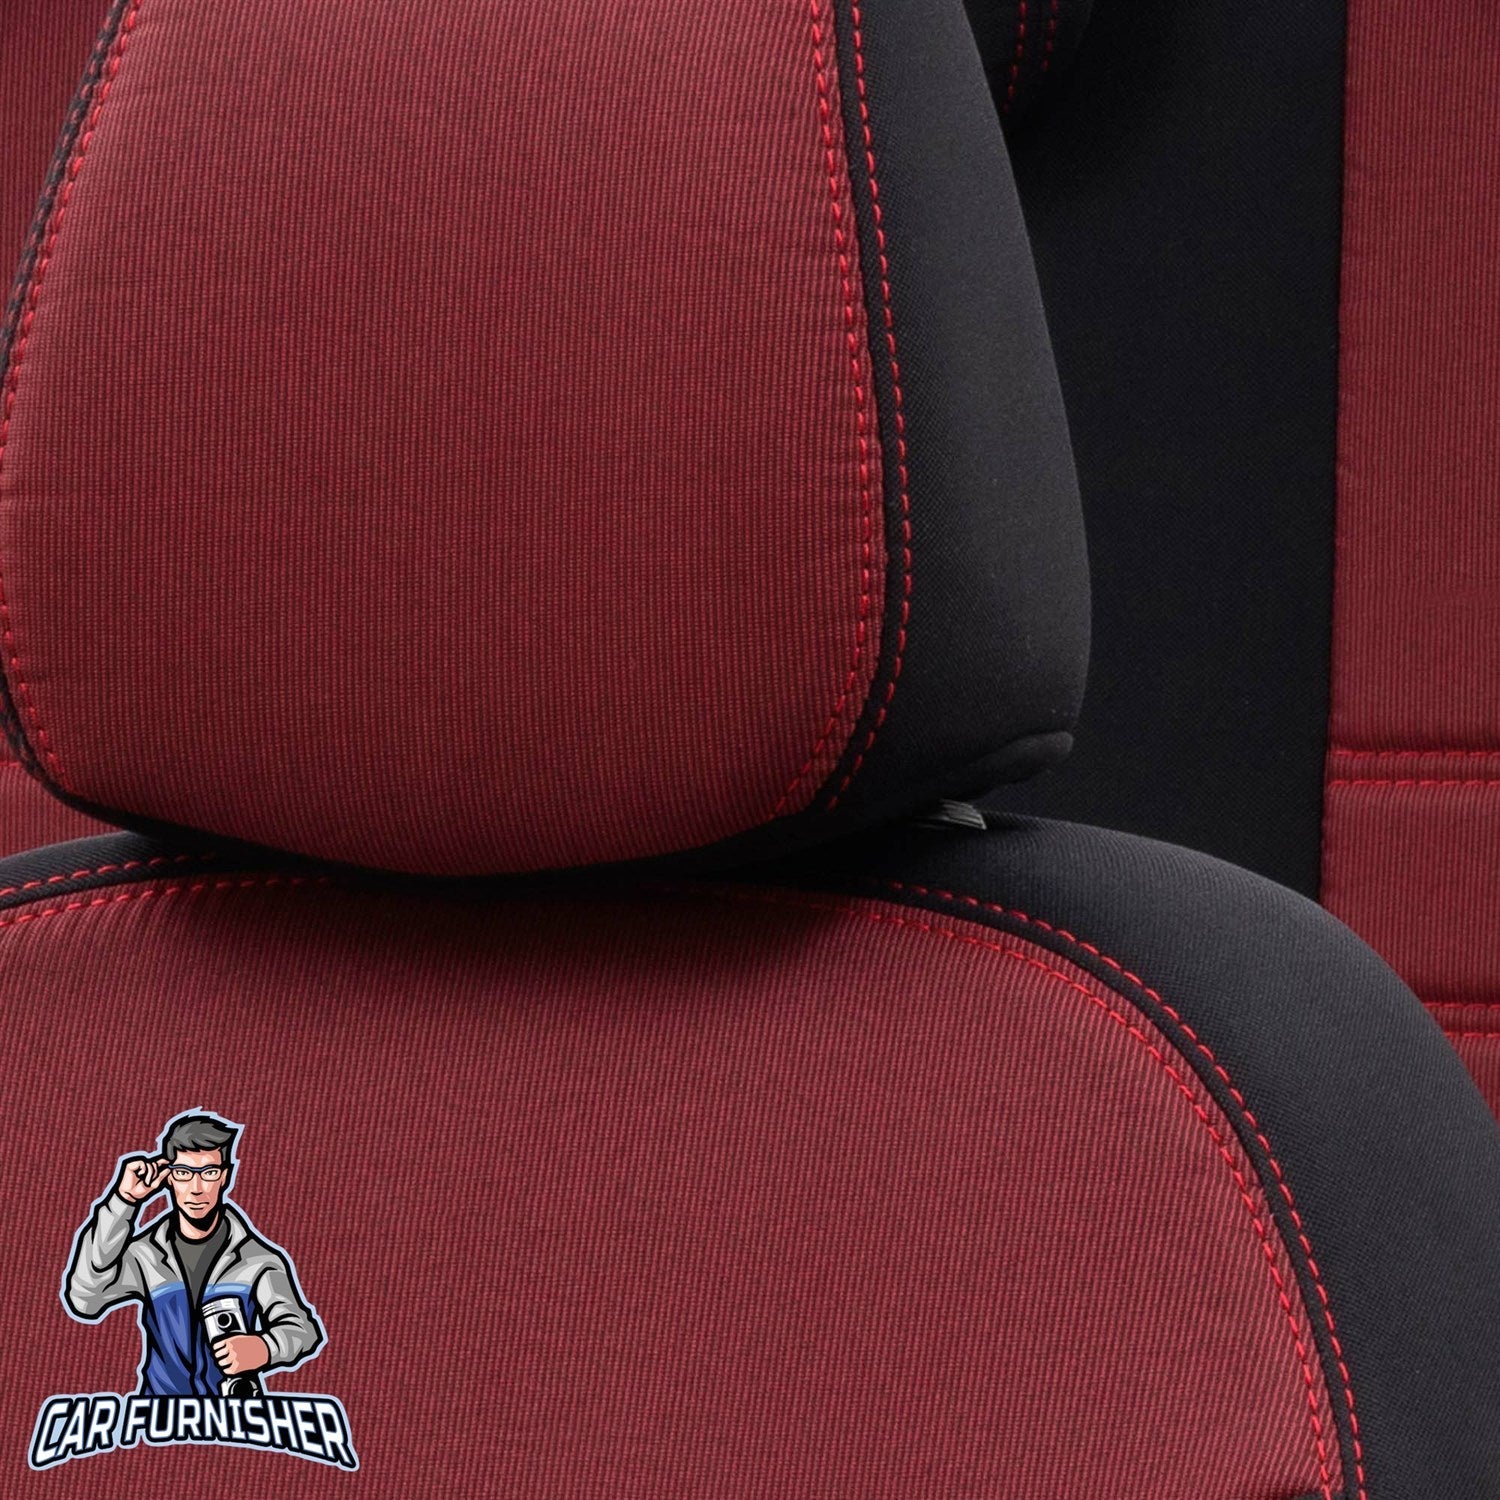 Mitsubishi Attrage Seat Covers Original Jacquard Design Red Jacquard Fabric